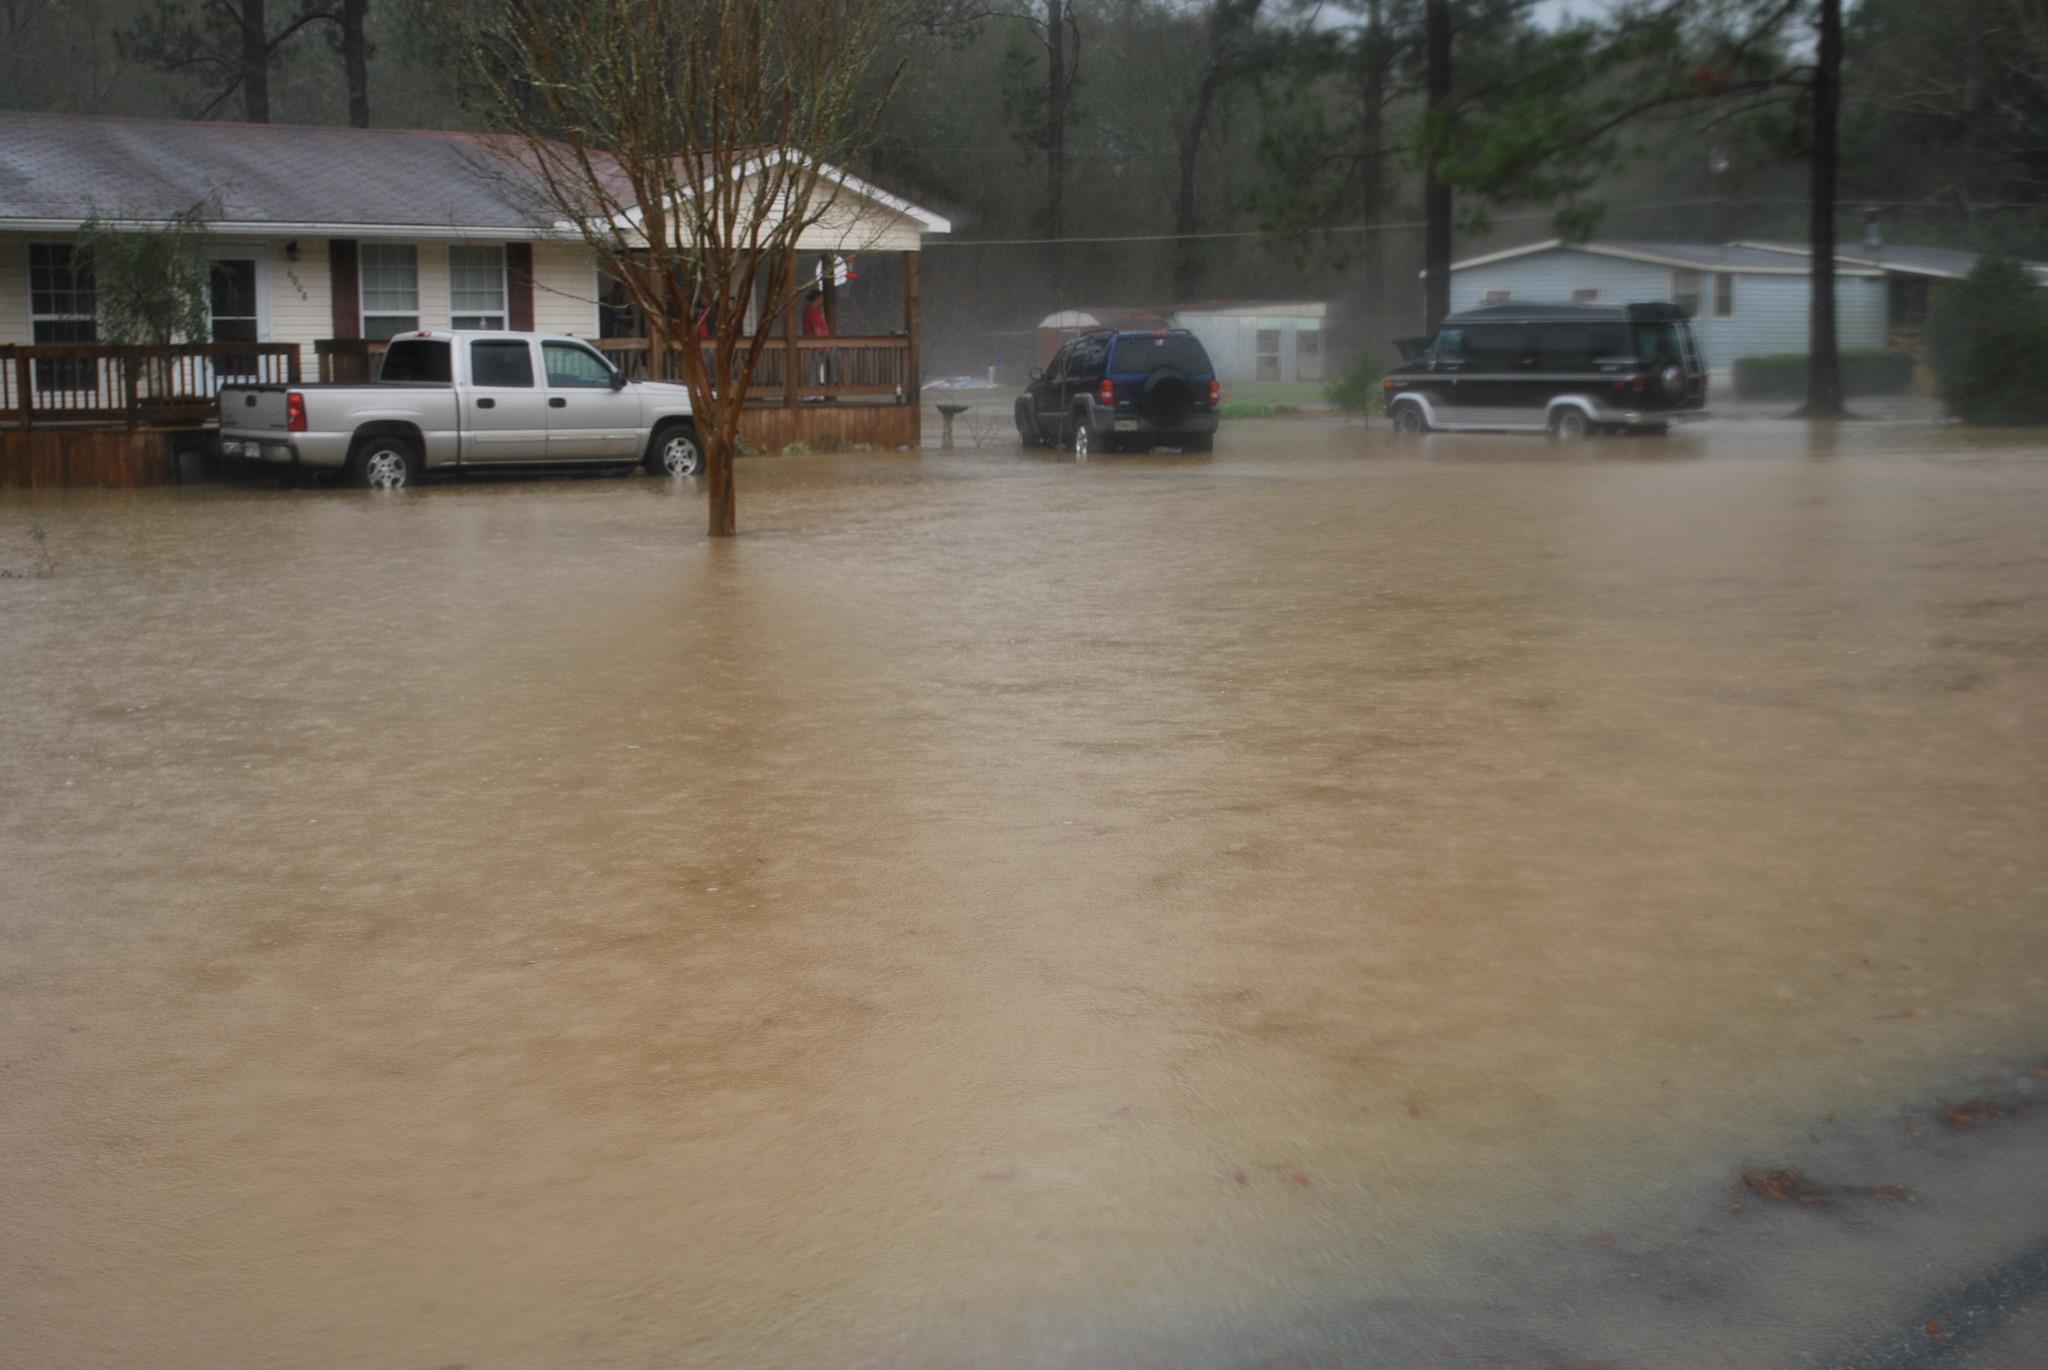 Flooding of a neighborhood in Worth County, GA on February 23, 2013. Photo courtesy of Kellie Parton.